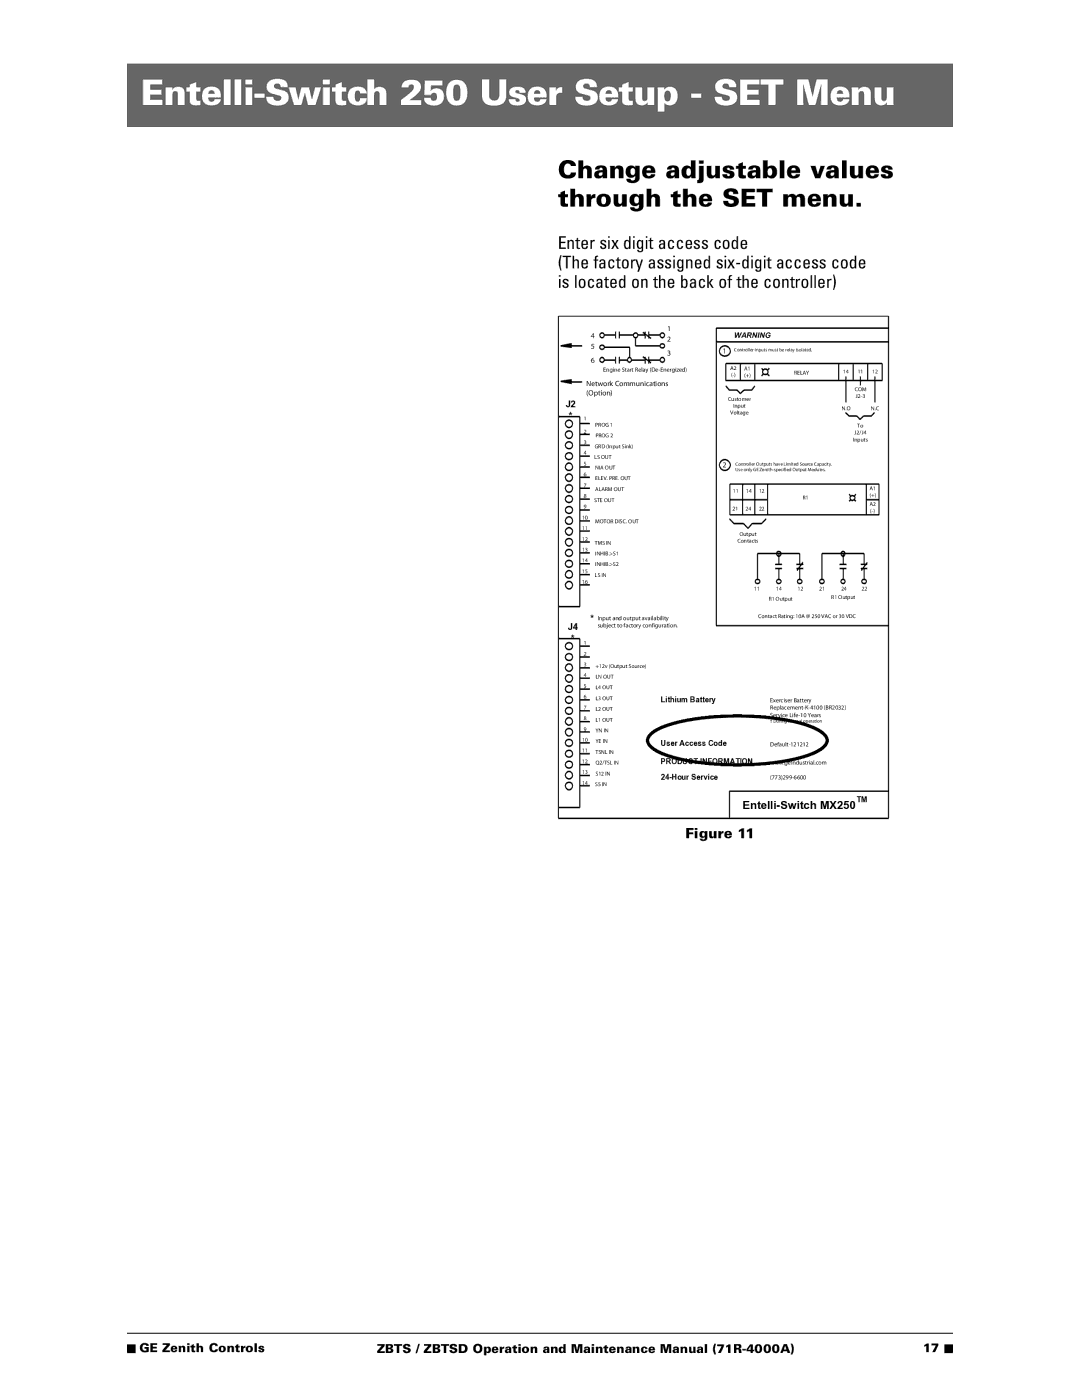 GE ZBTSD manual Entelli-Switch 250 User Setup SET Menu, Change adjustable values through the SET menu 